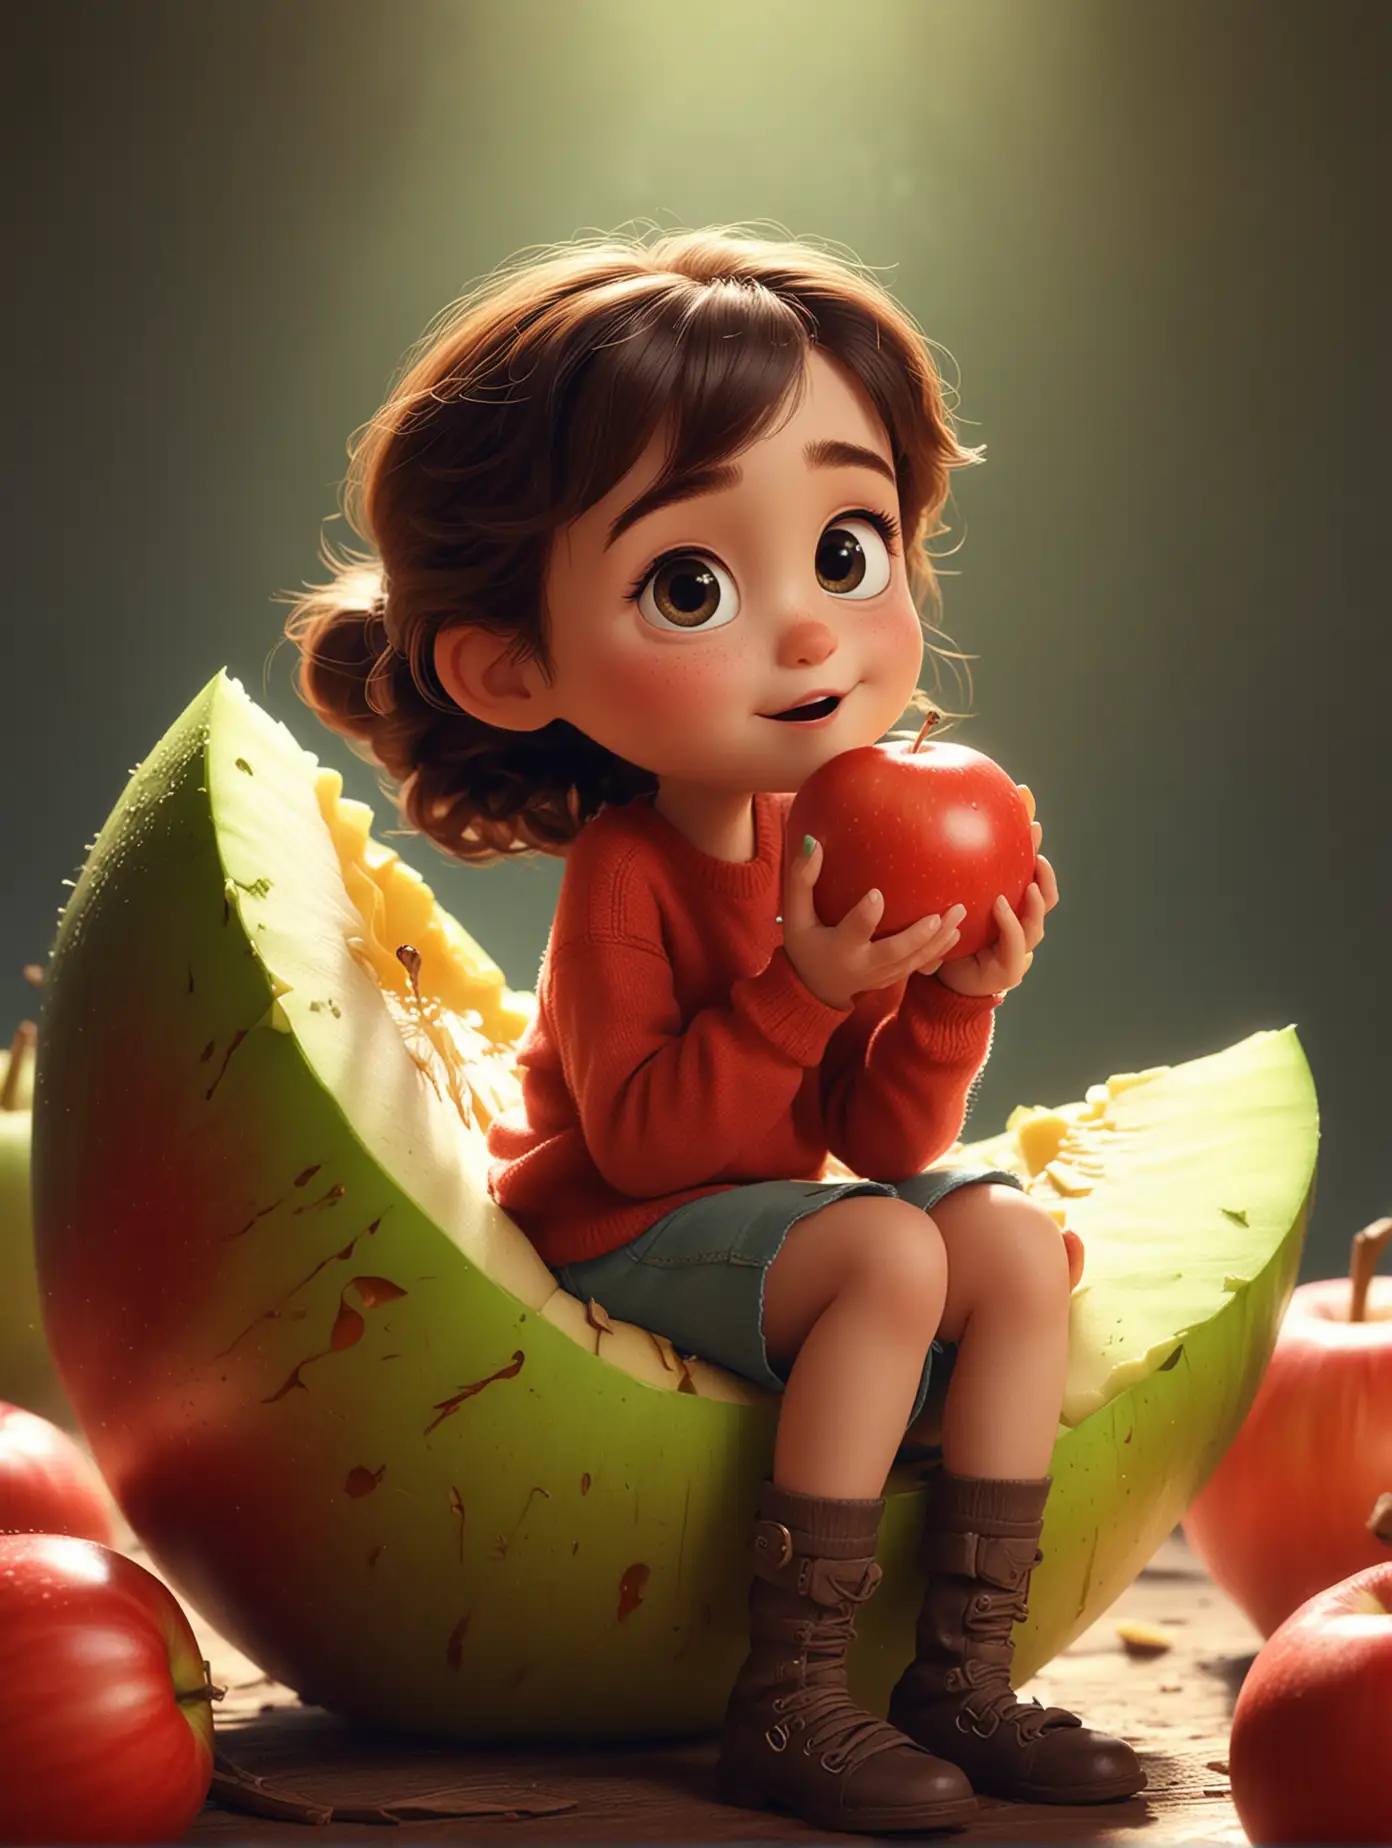 Adorable-Pixar-Girl-Eating-Apple-on-Giant-Apple-Slice